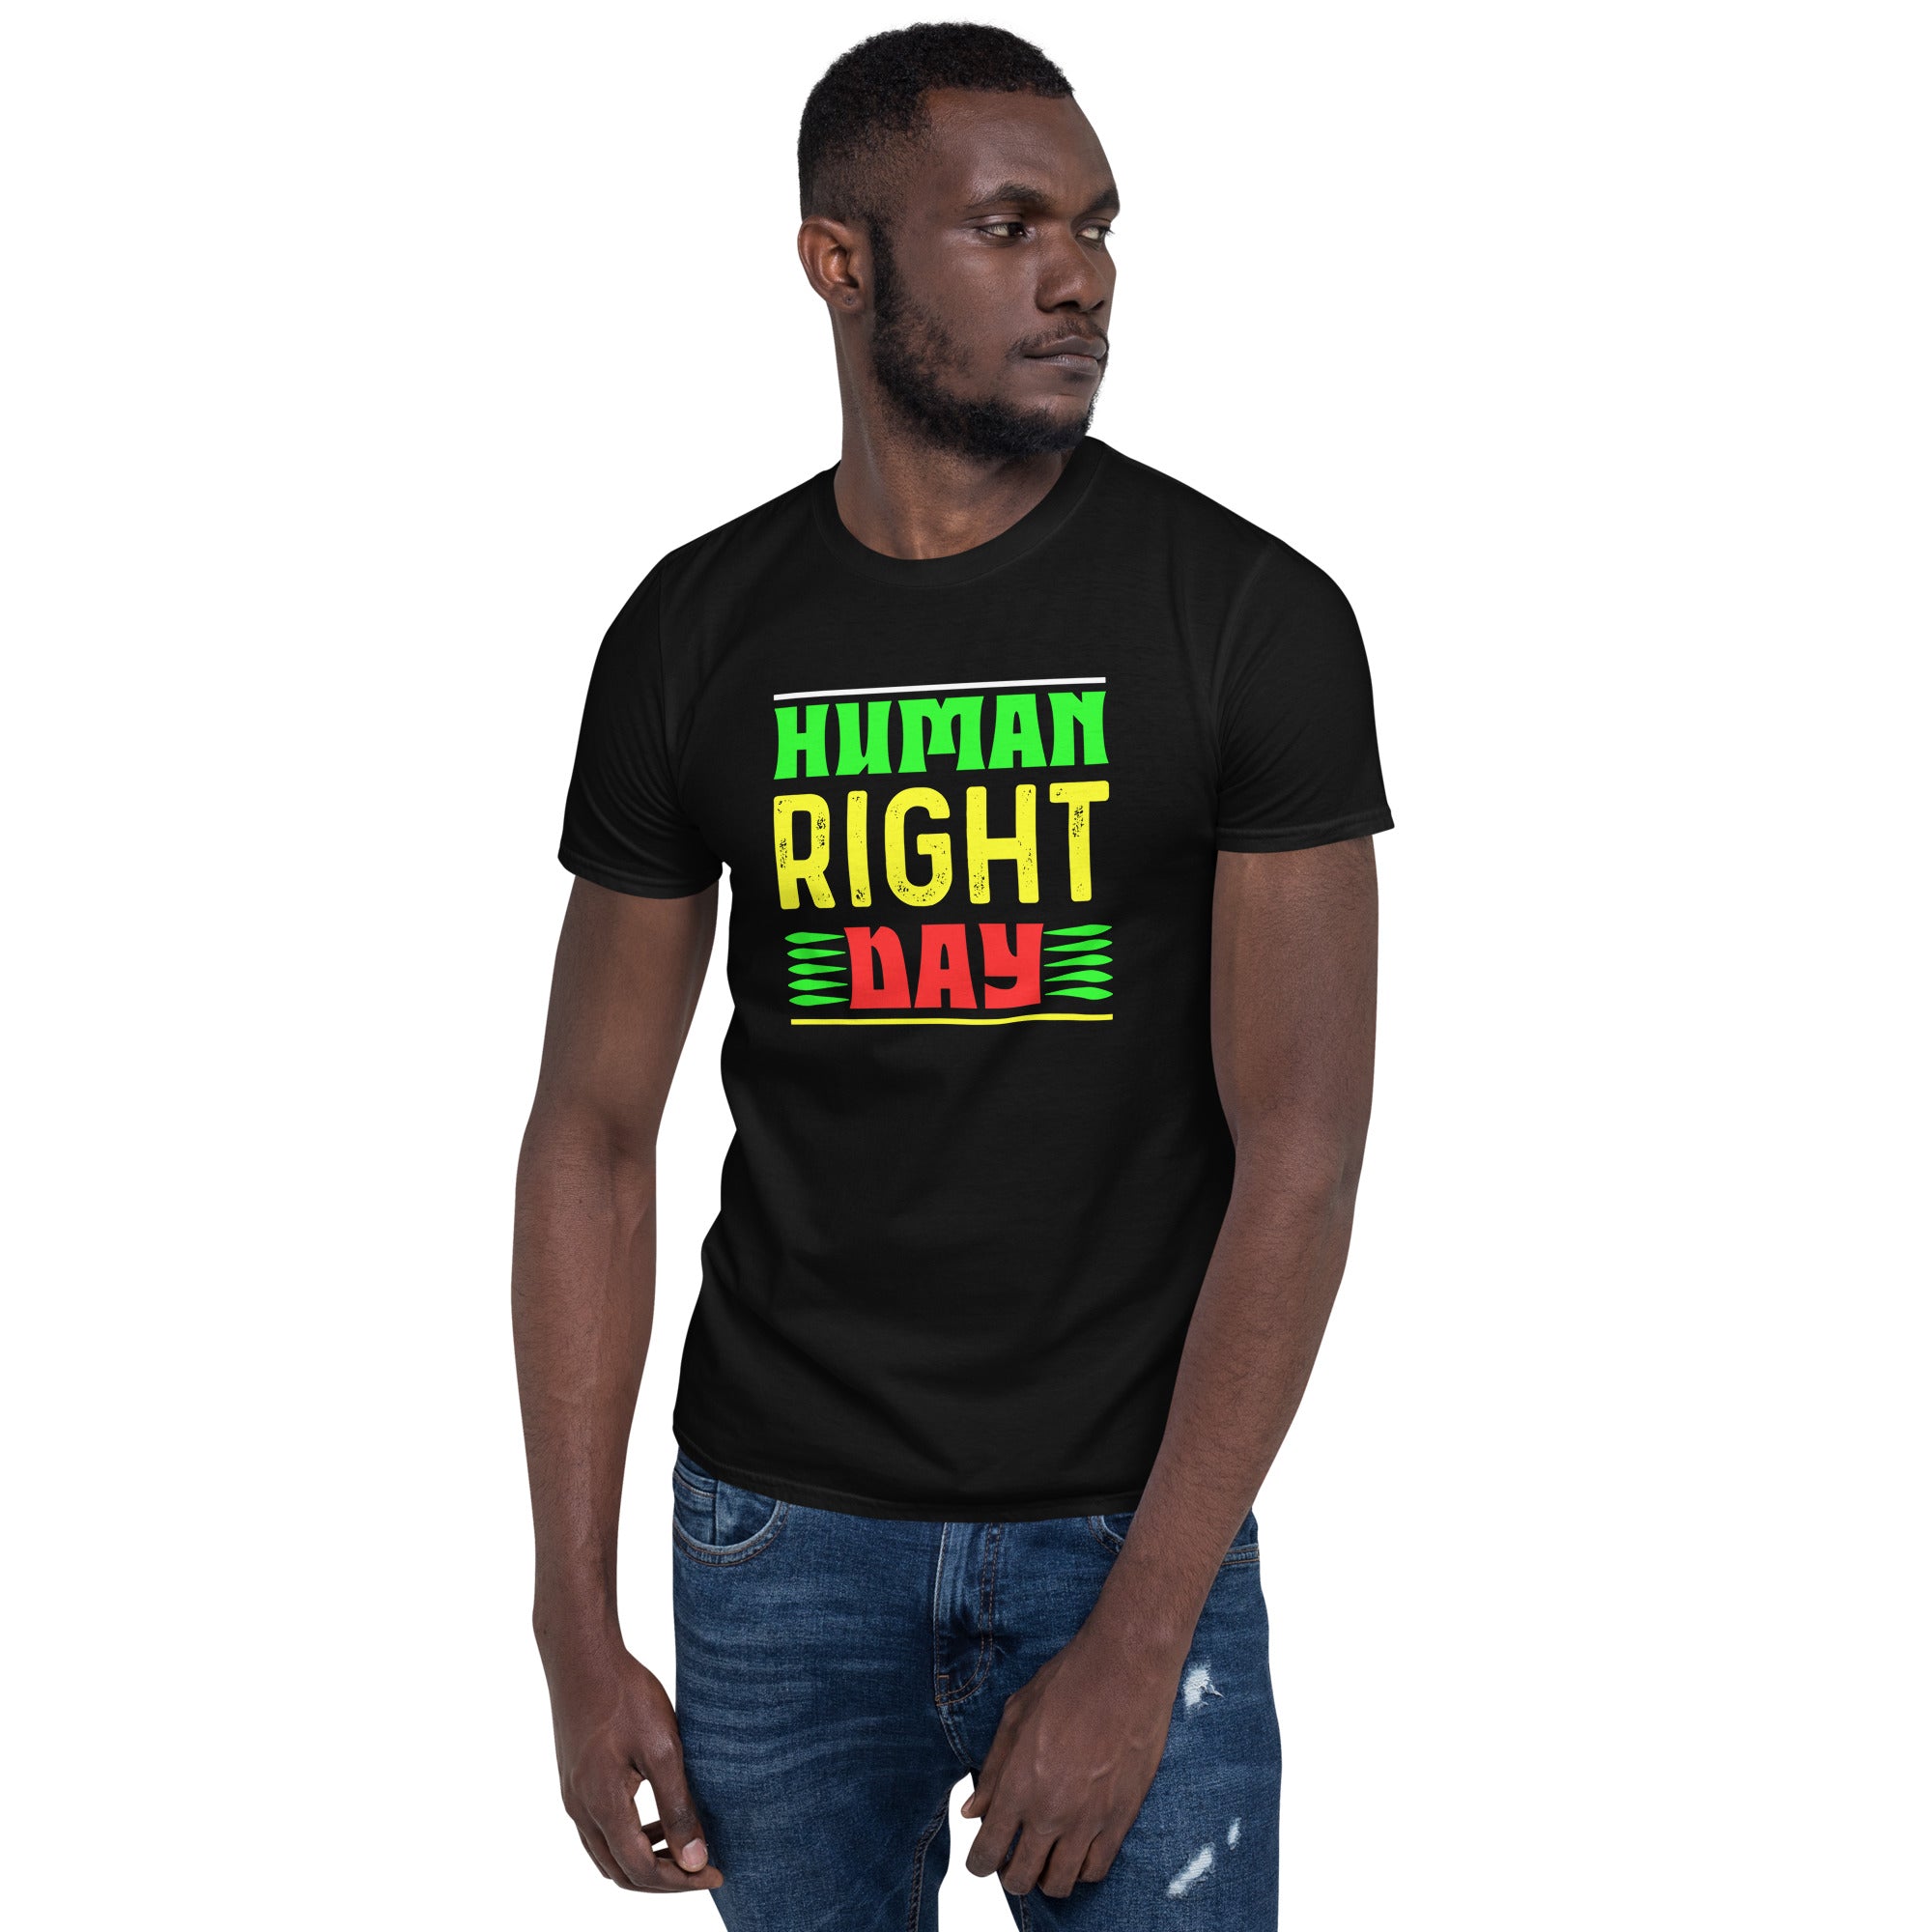 Human Rights Day - Short-Sleeve Unisex T-Shirt